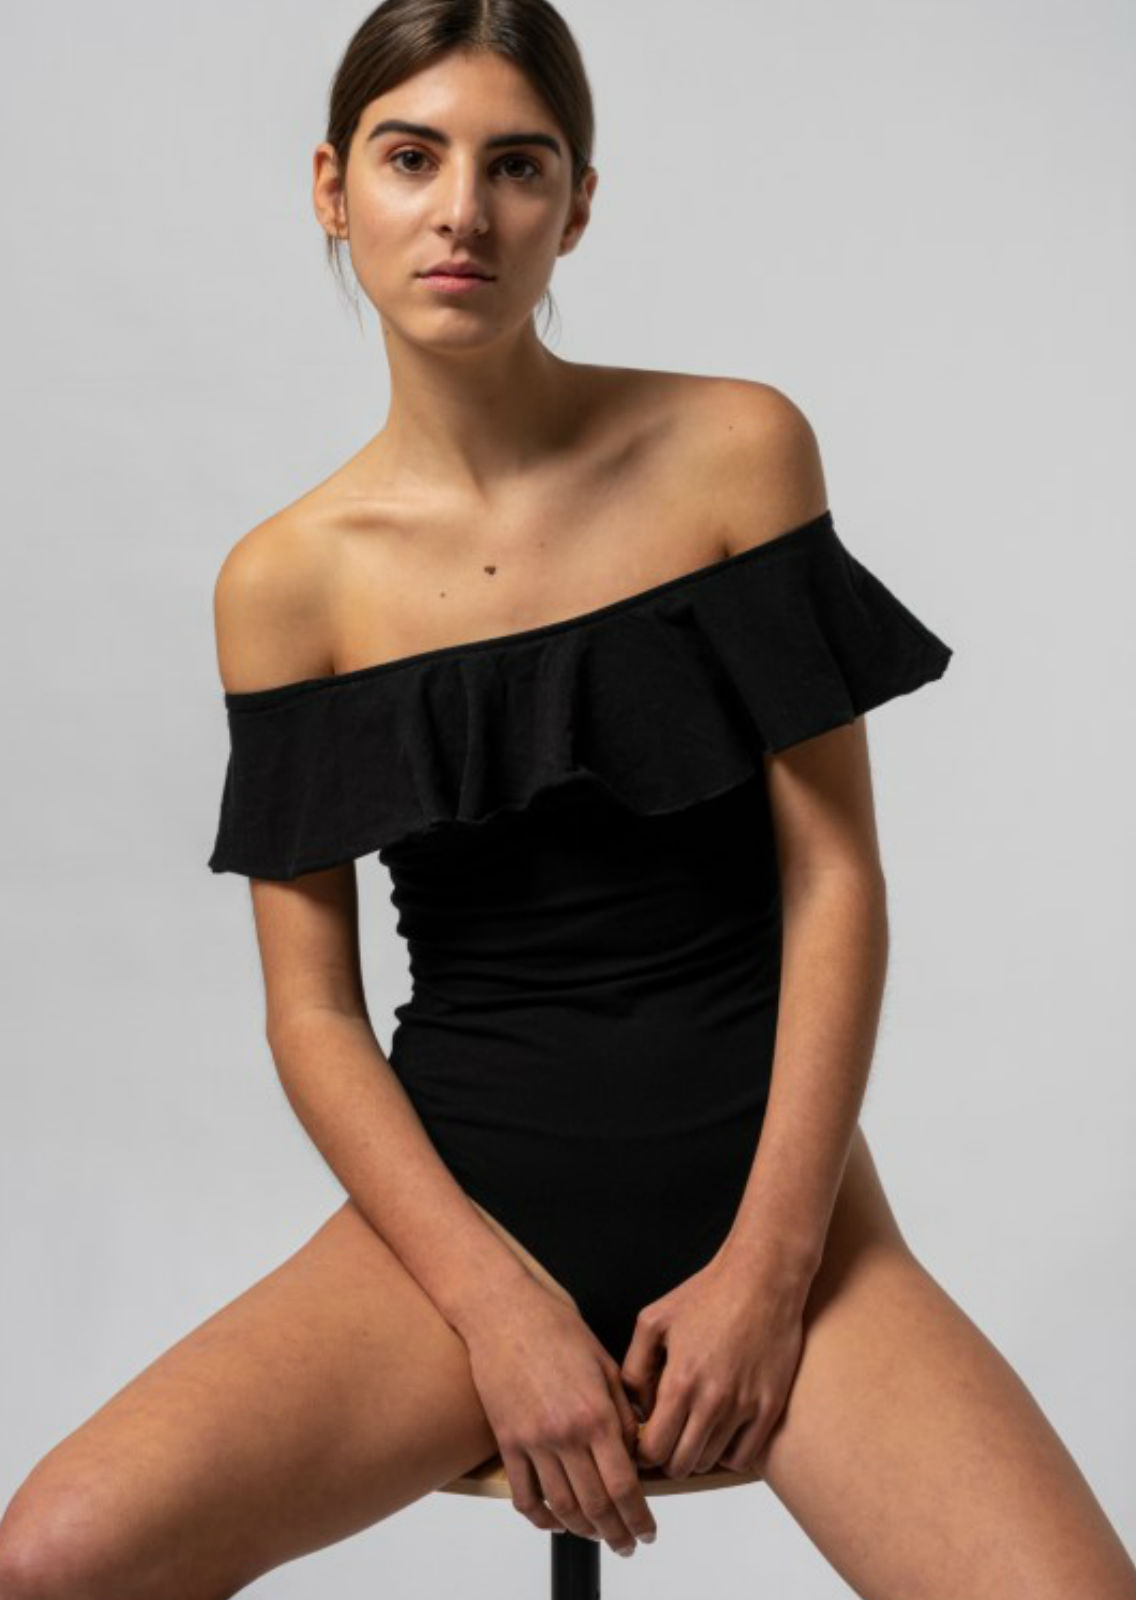 SOFIA LAPIETRA. Carmen Duran Model Agency.